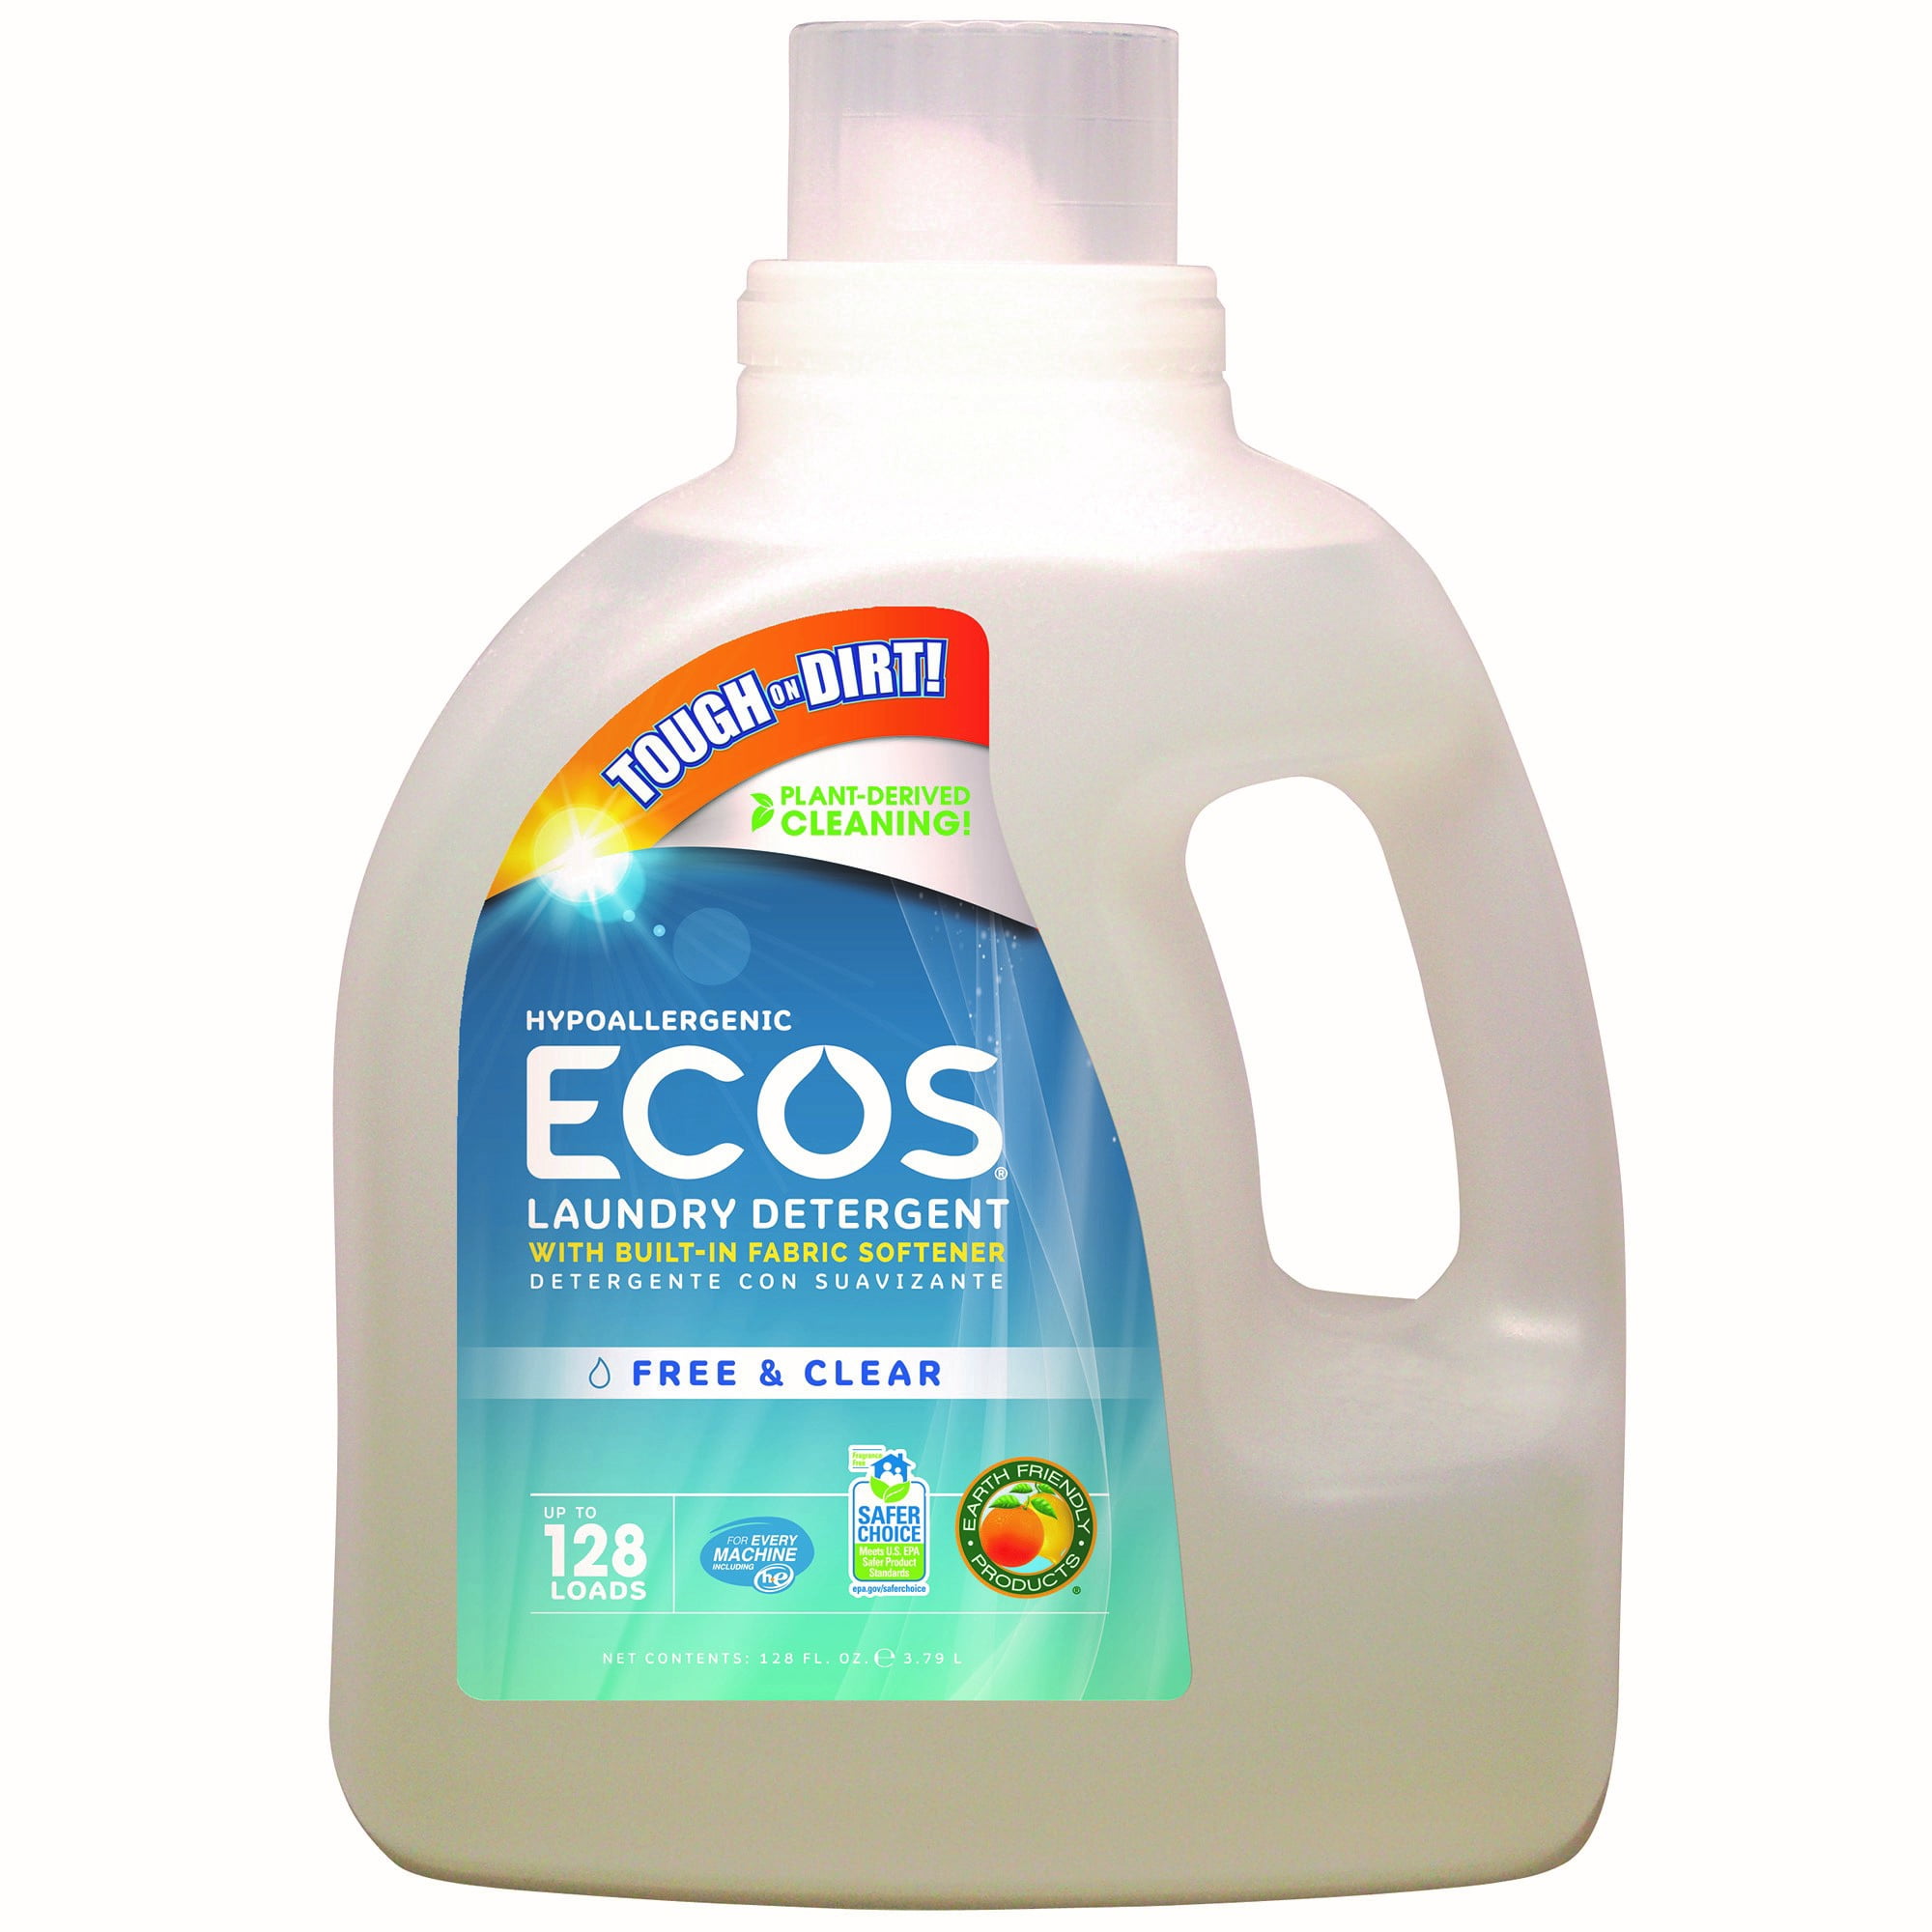 Baby ecos laundry detergent